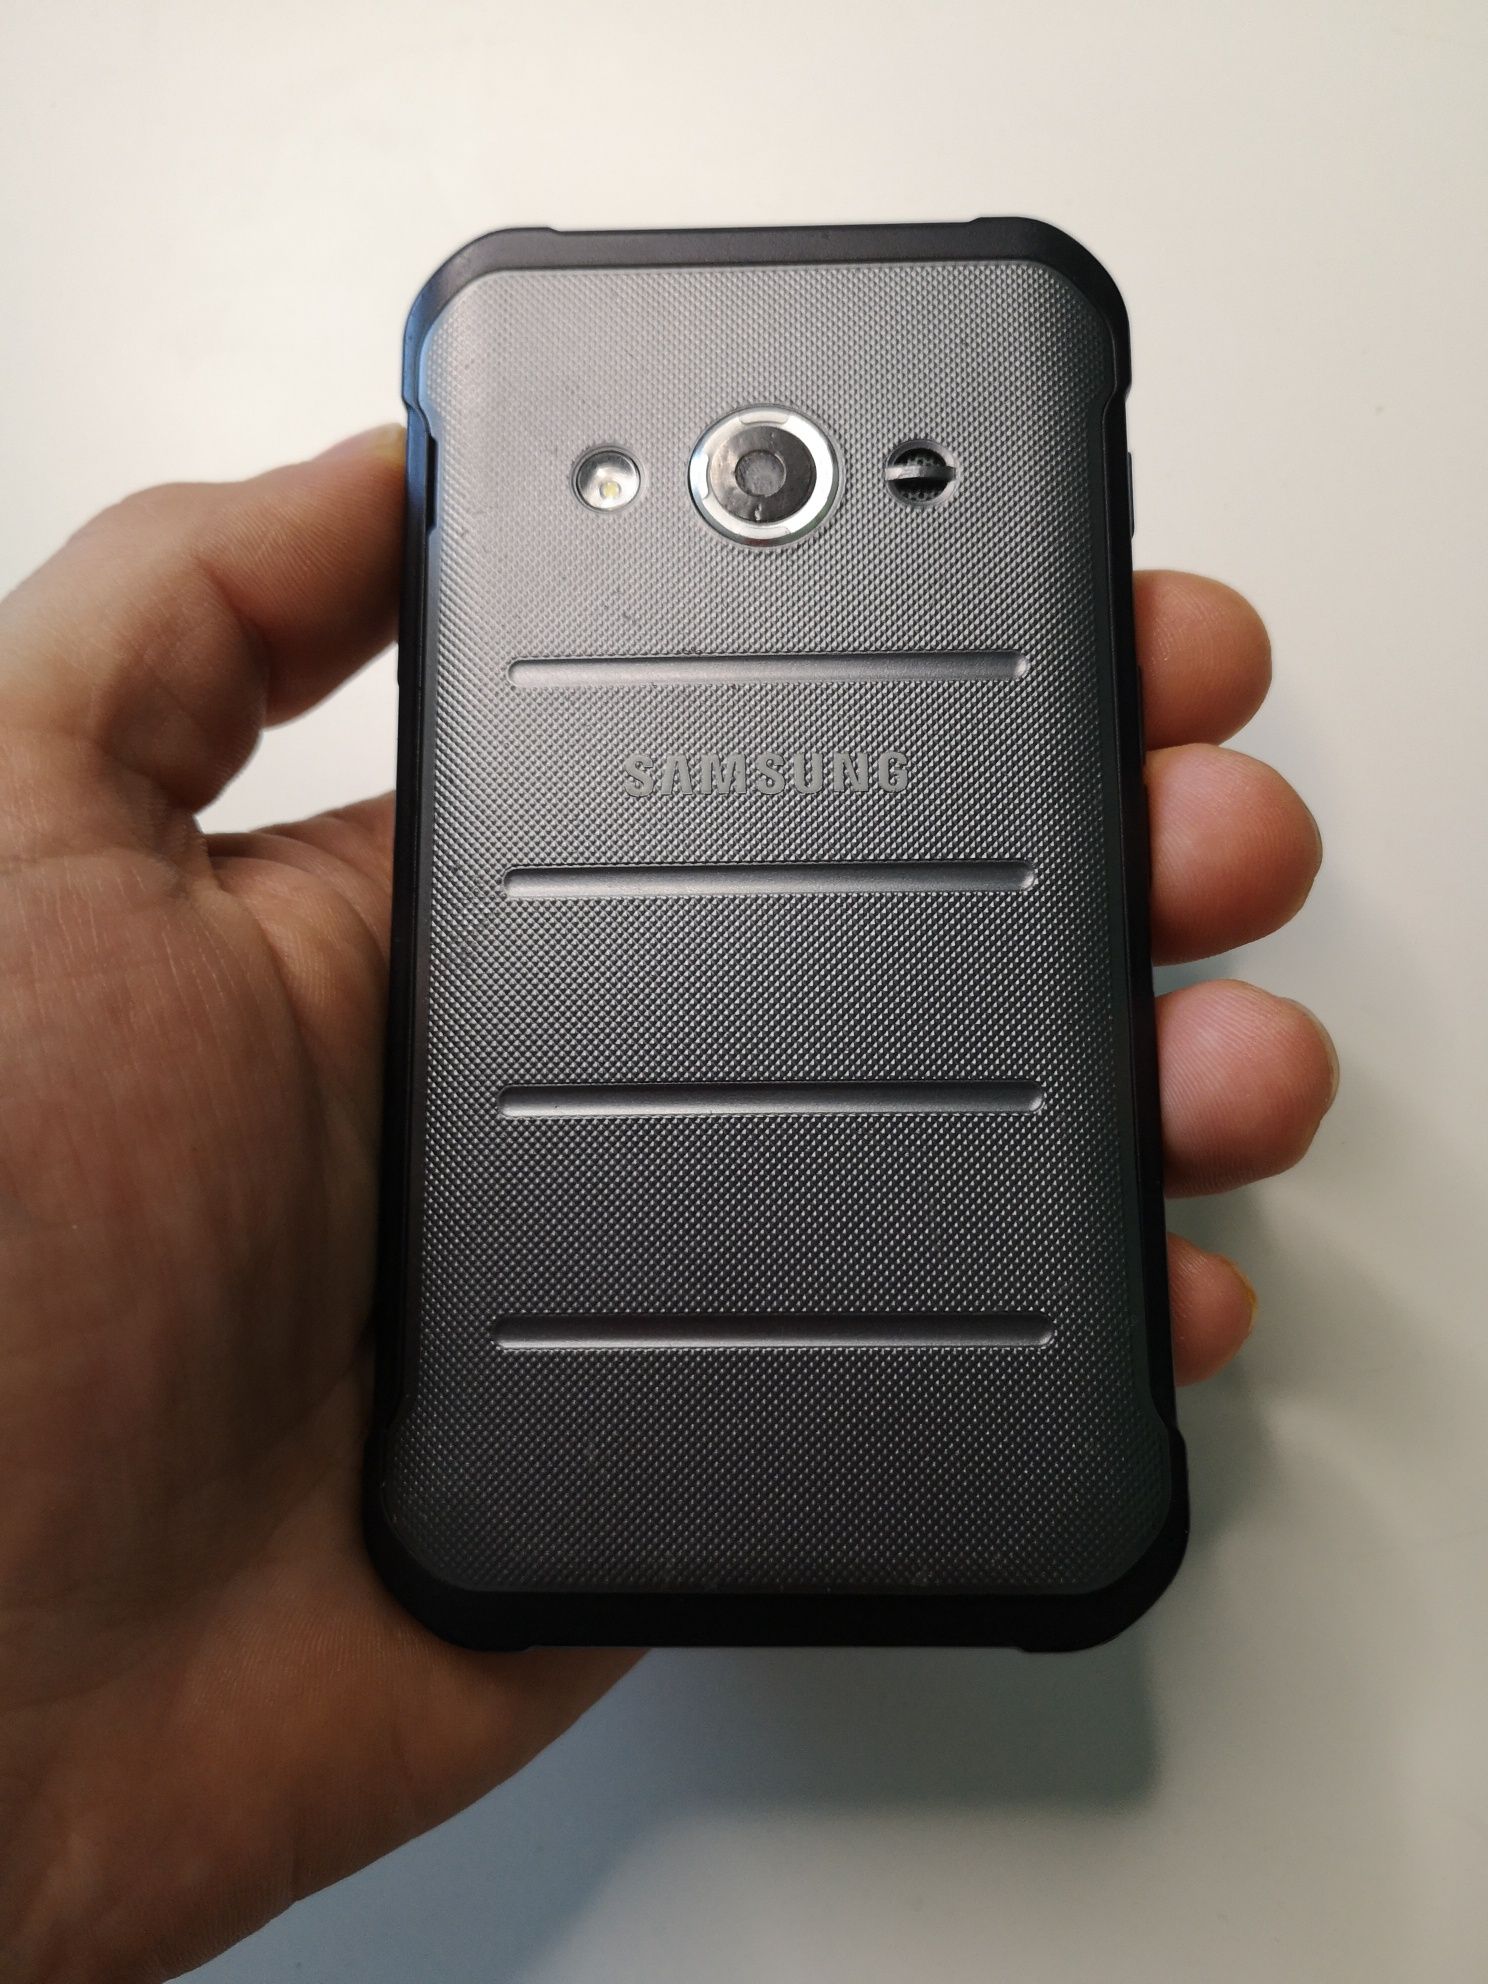 Захищений Samsung Galaxy Xcover 3 Самсунг гелегсі
Samsung